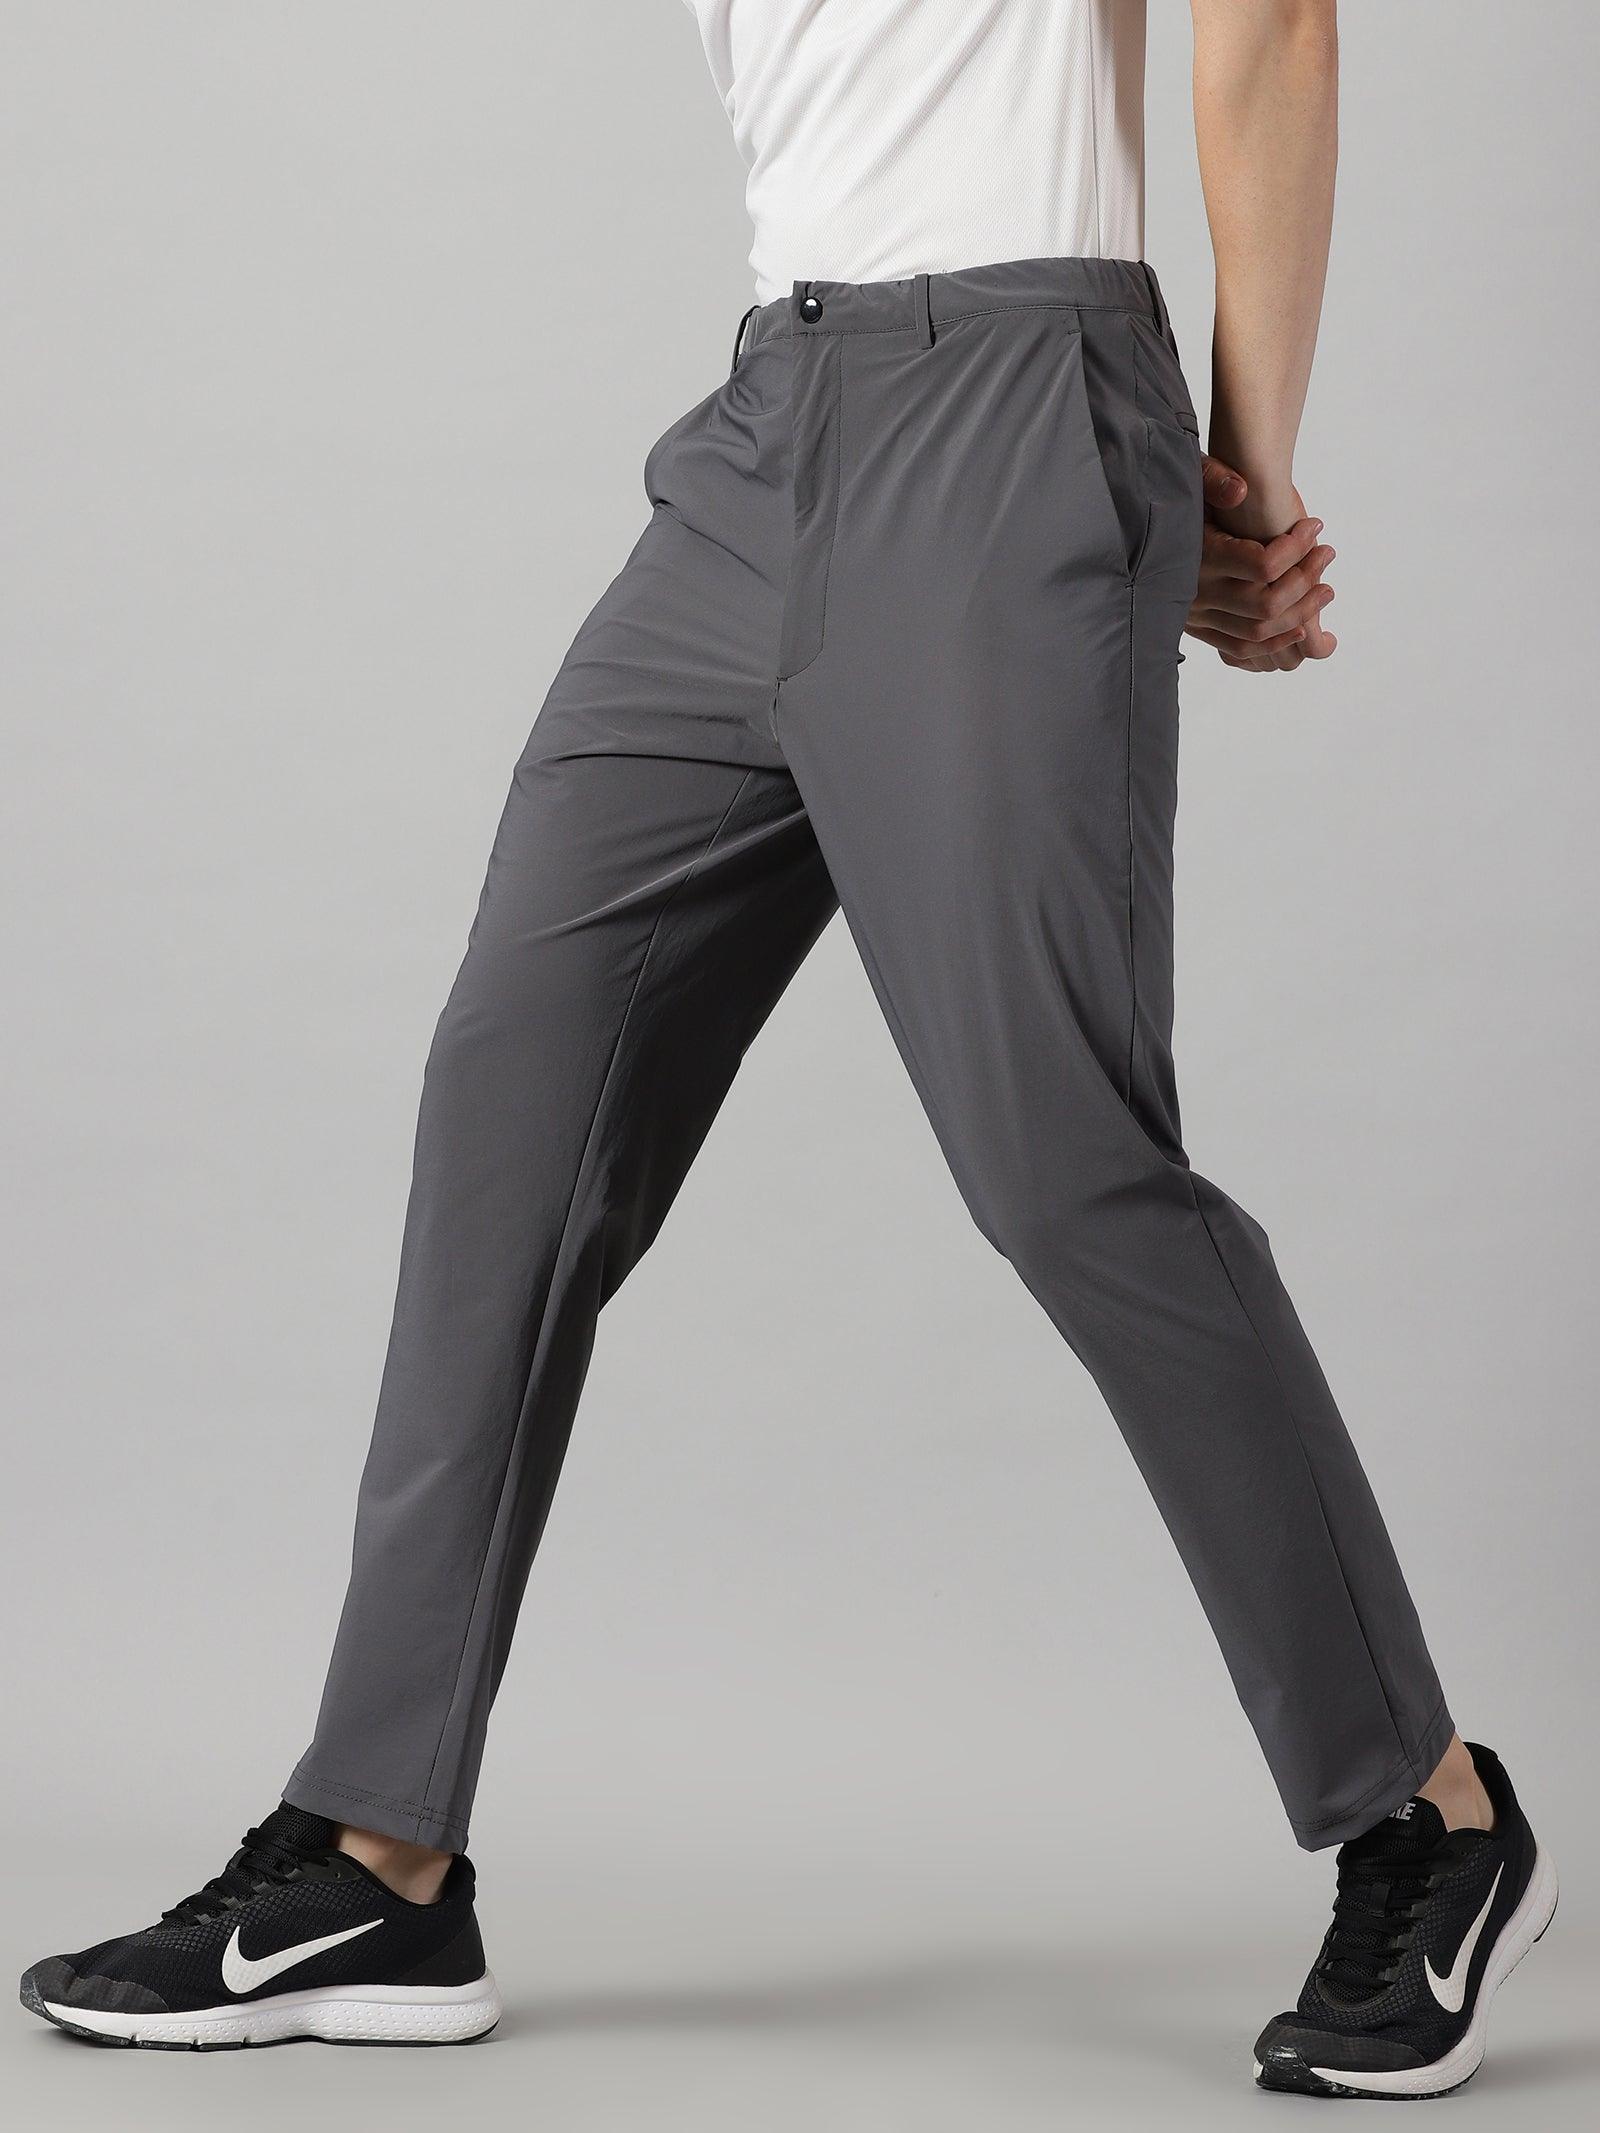 Buy Nike Pants, Sweatpants, Track Pants & Joggers for Men & Women in UAE |  SSS